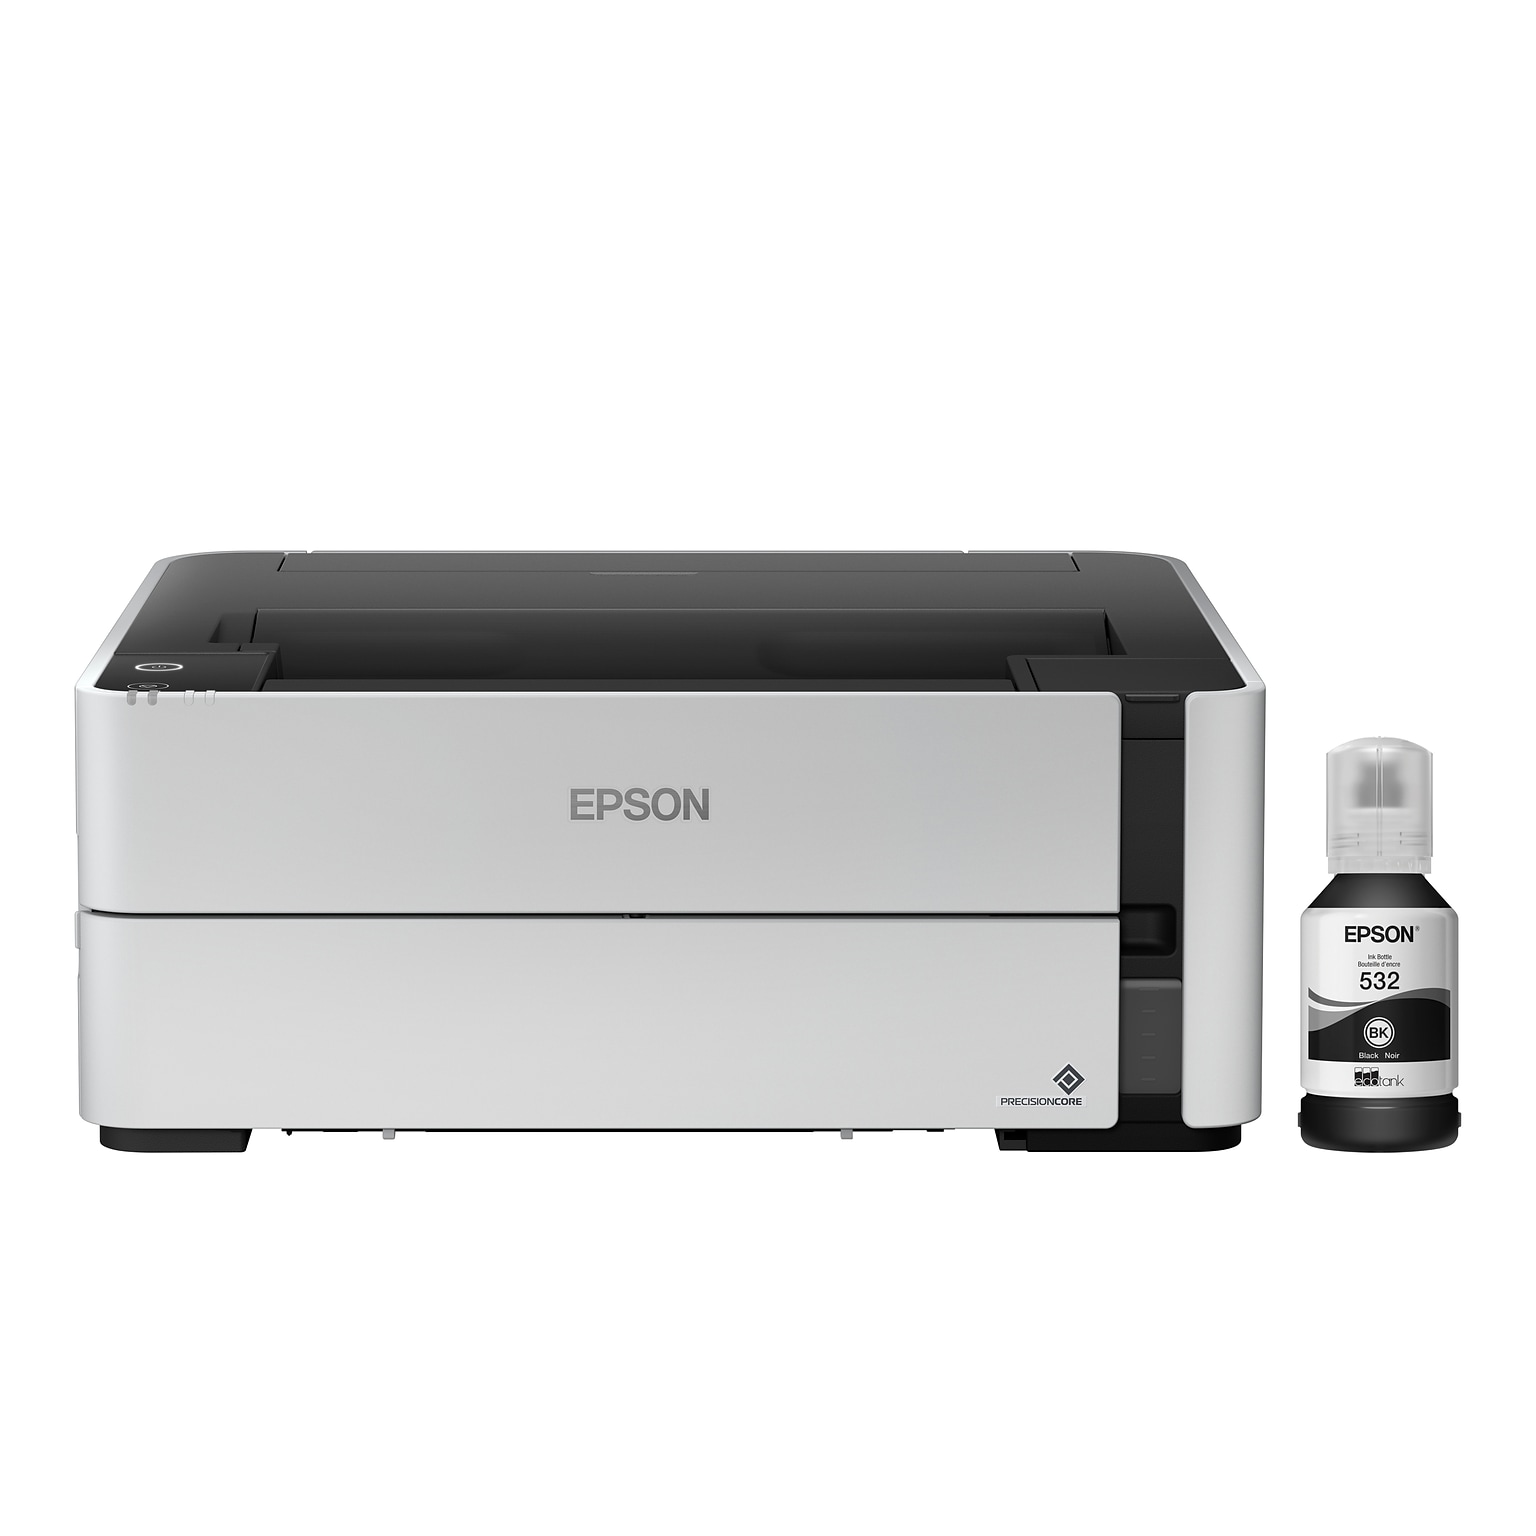 Epson EcoTank ET-M1170 Wireless Monochrome Inkjet Printer